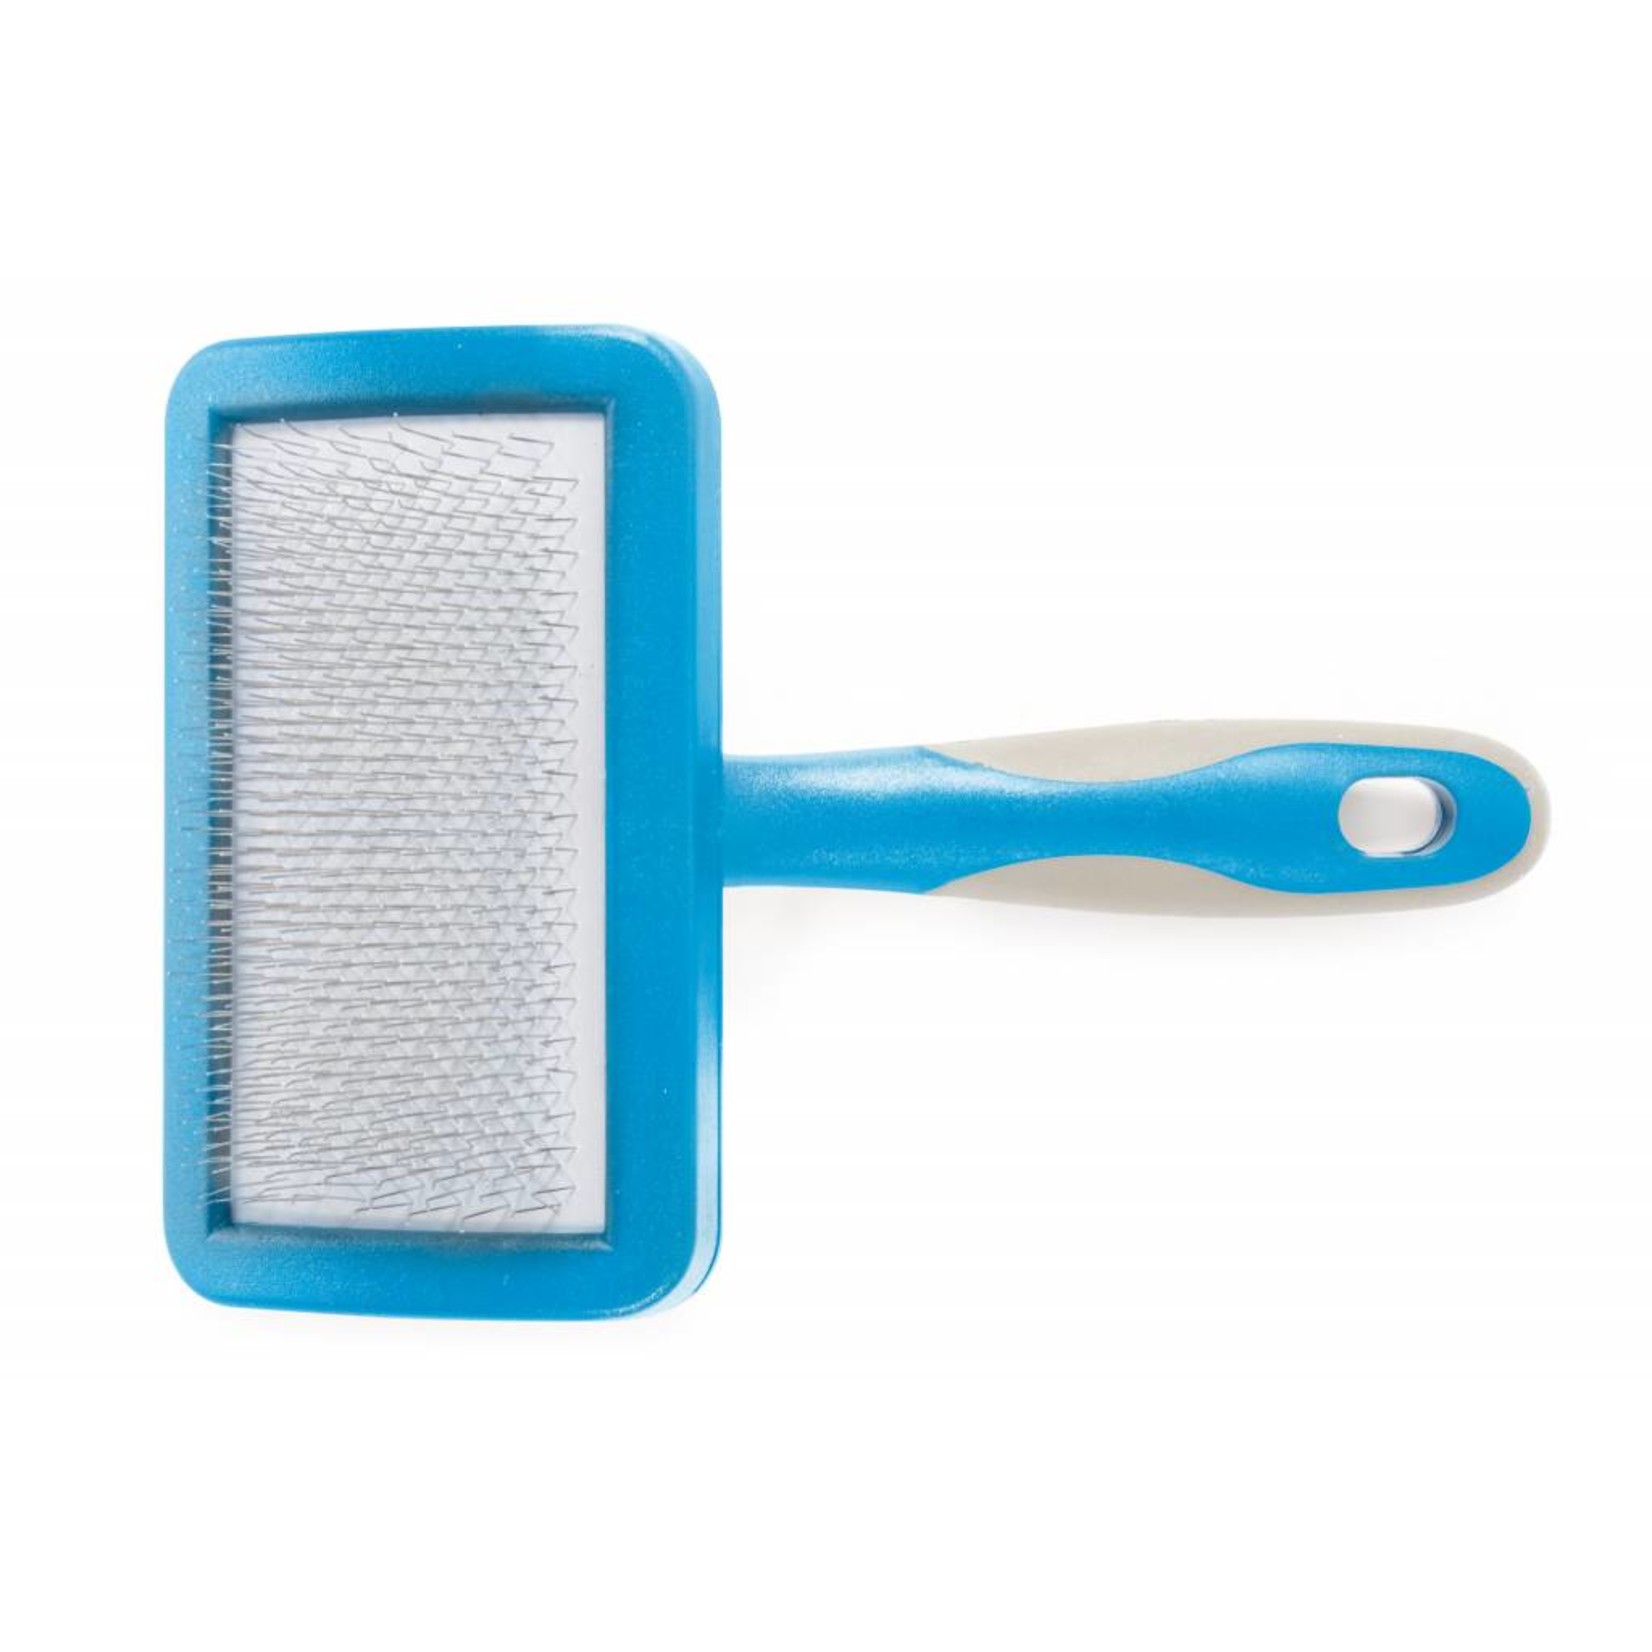 Ancol Ergo Dog Brush Universal Slicker, Large